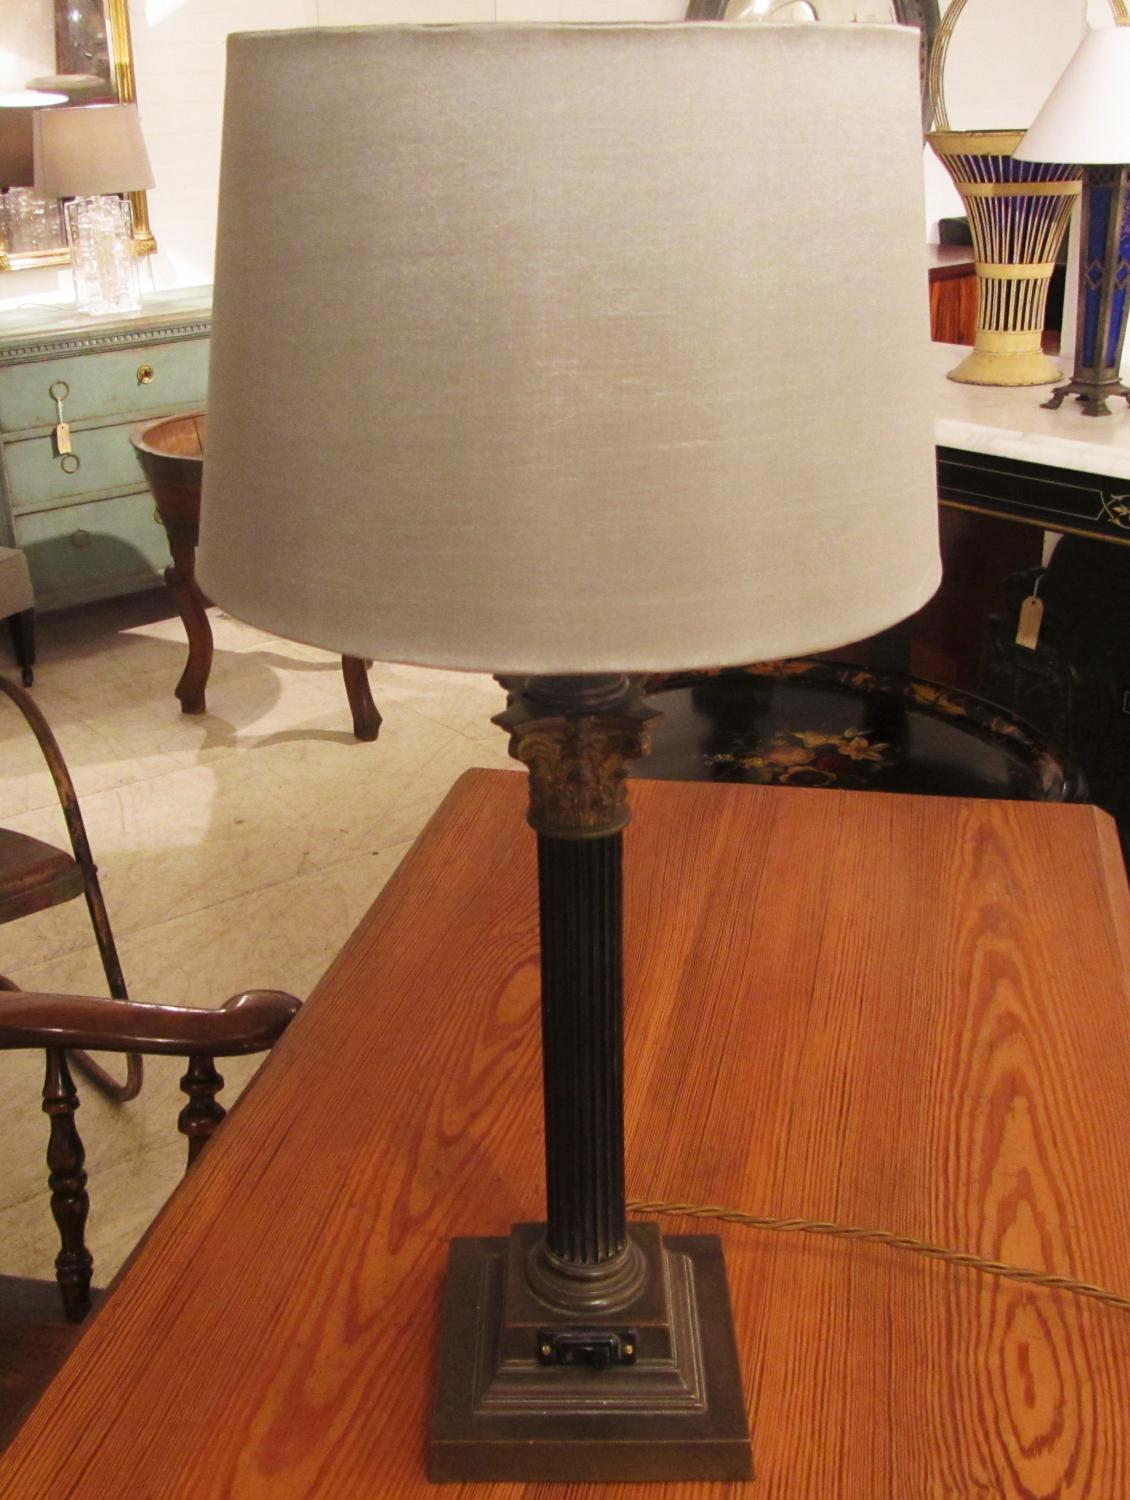 A column lamp